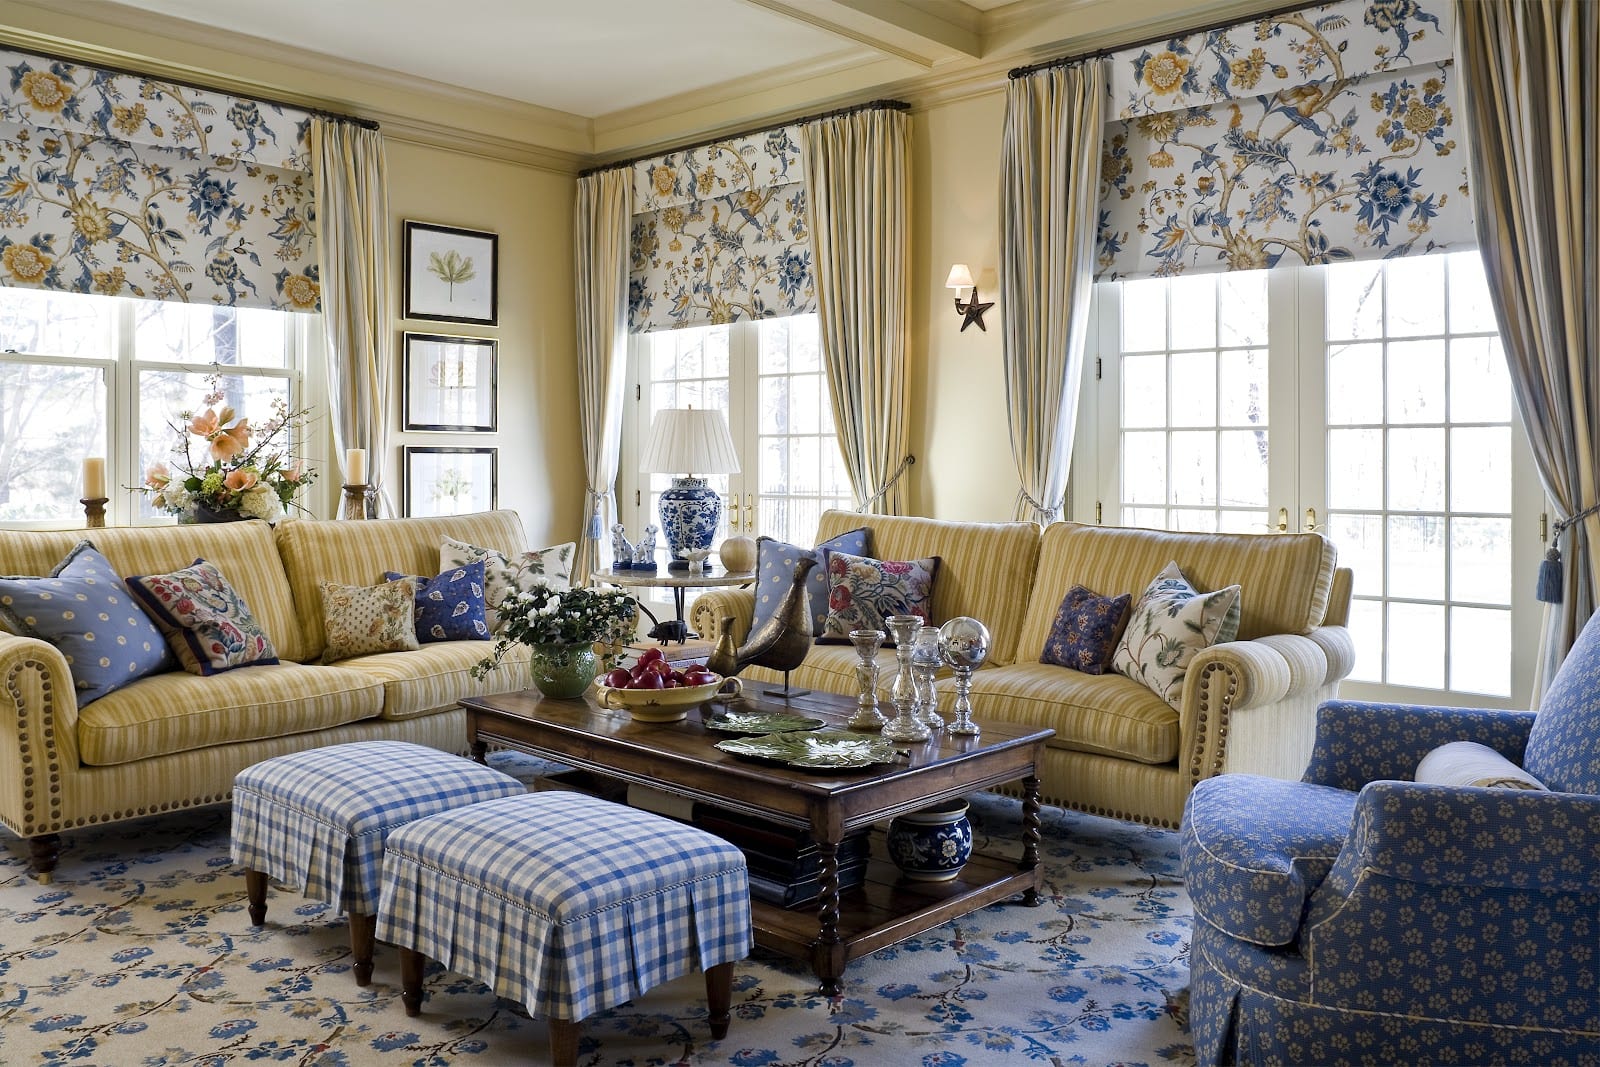 Textile decor for a beautiful interior